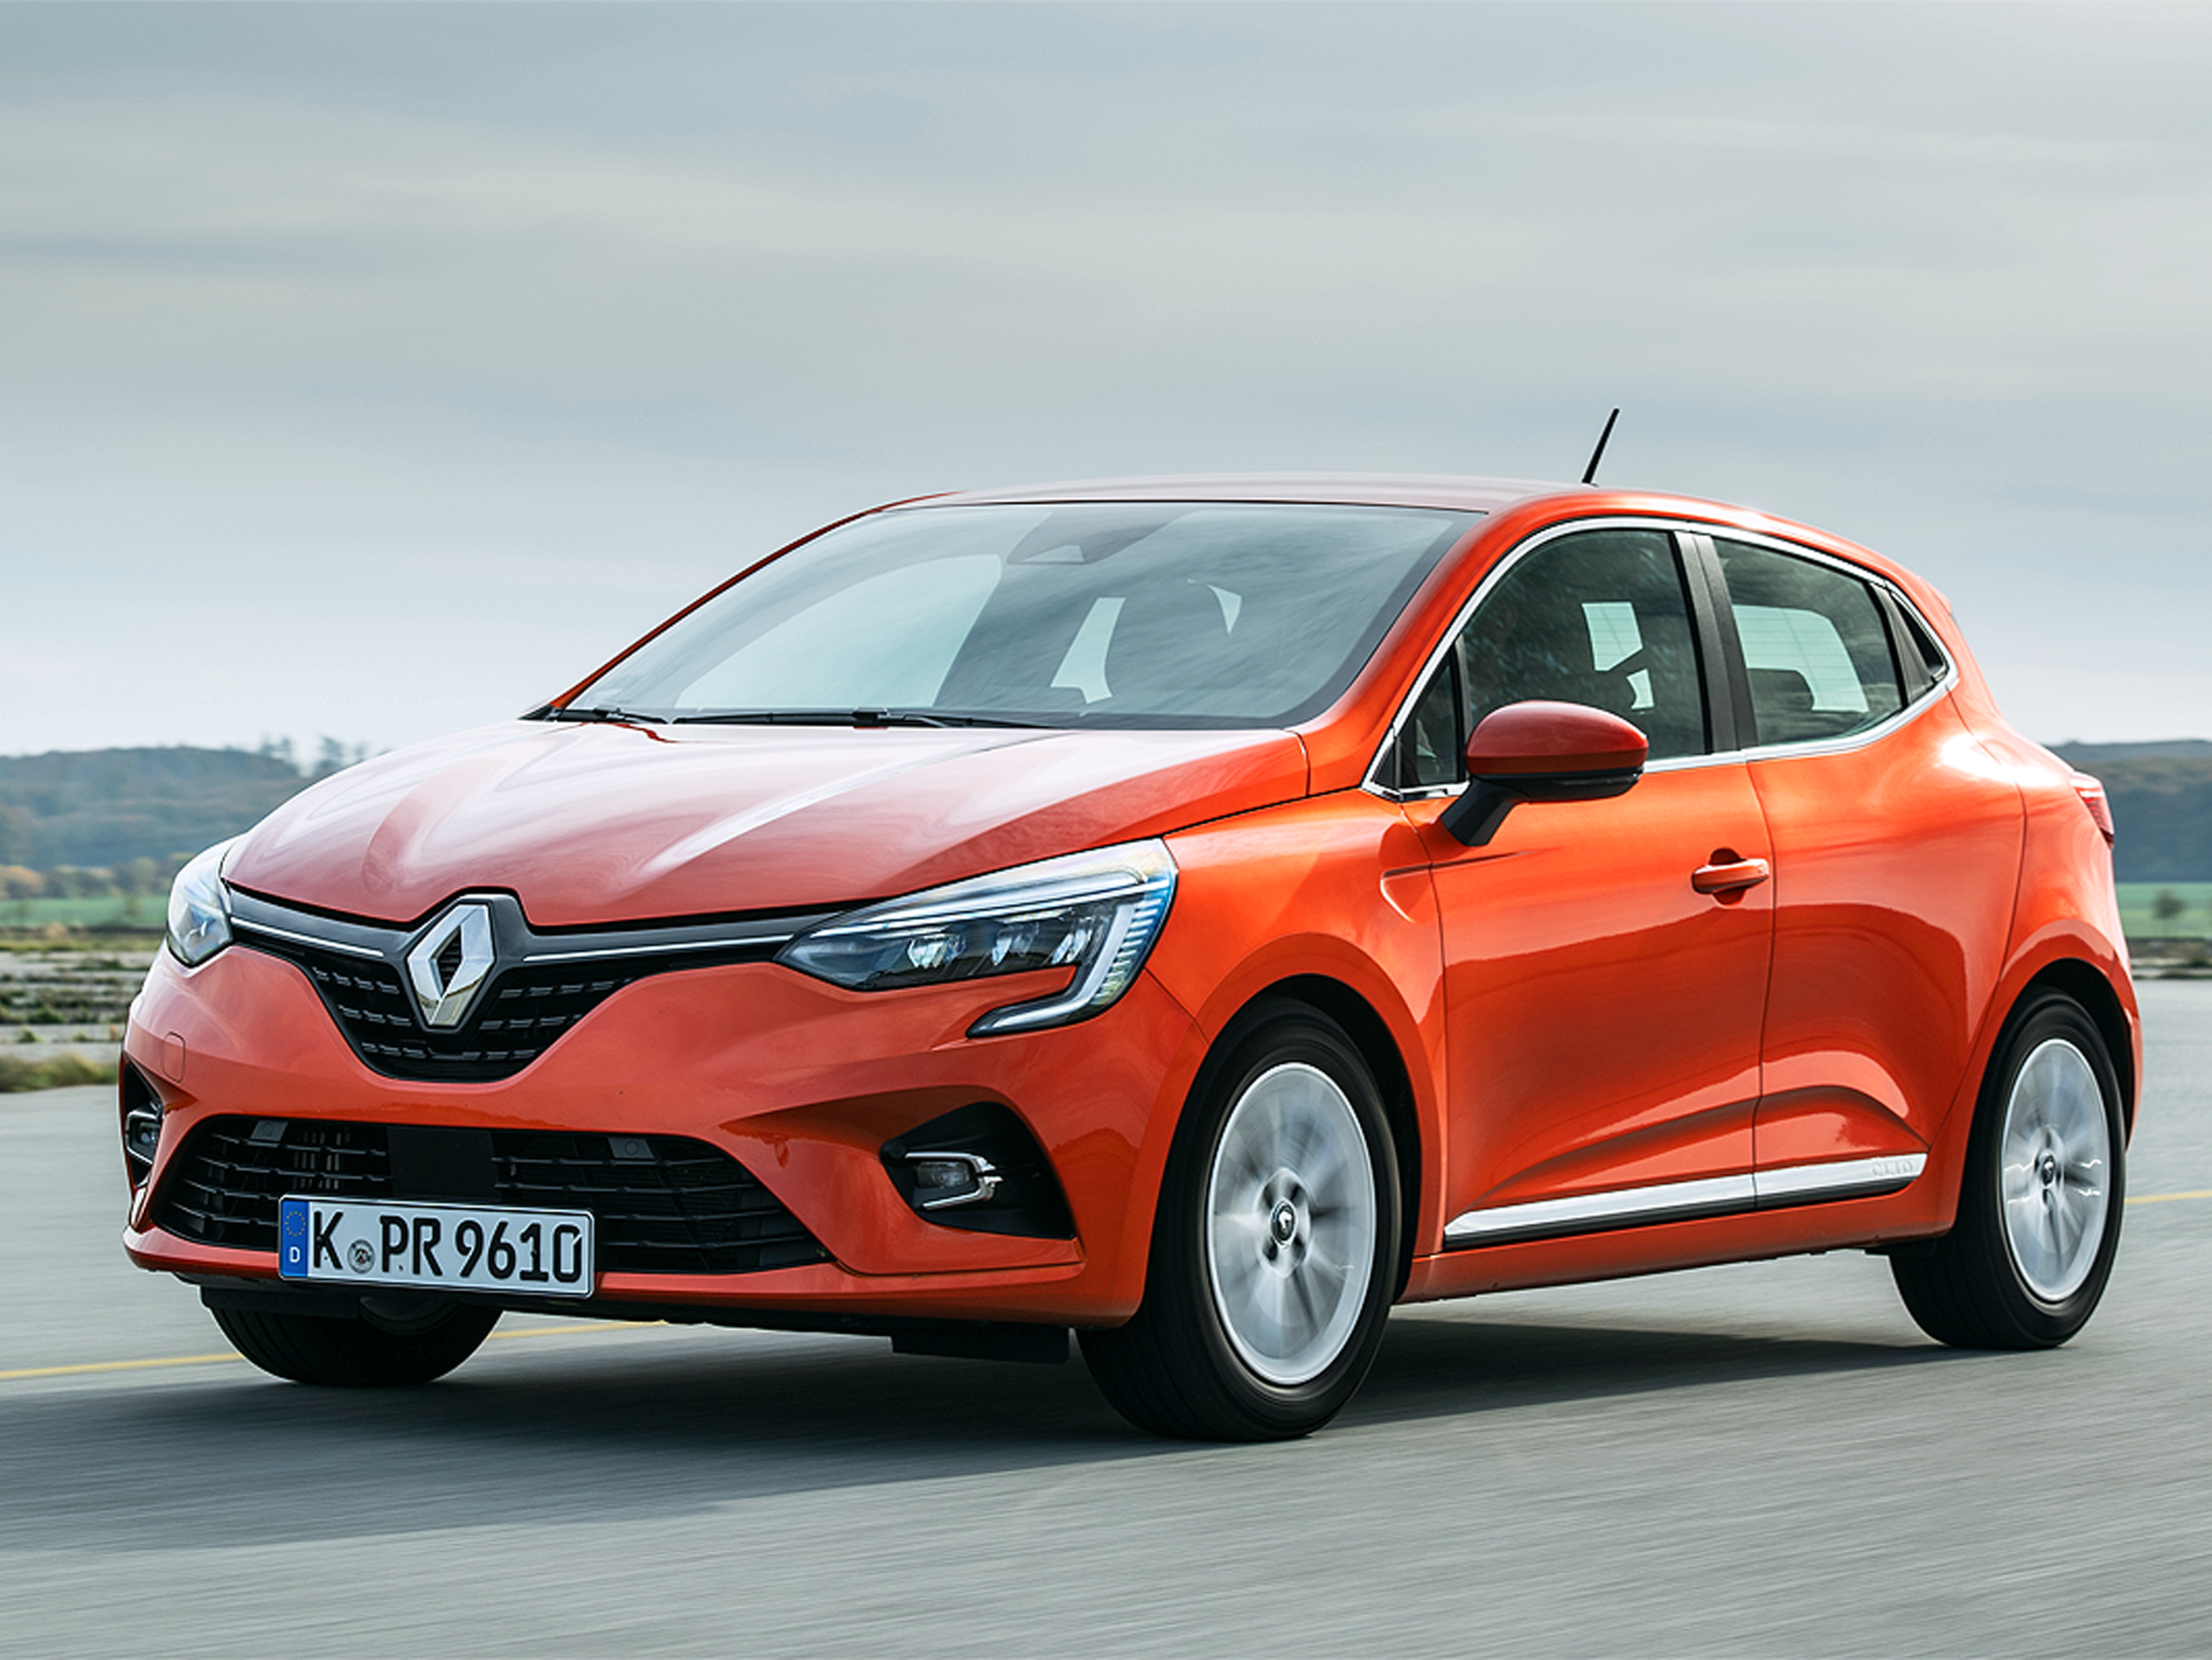 Den kompakten Renault Clio ab 114,99 Euro monatlich leasen - AUTO BILD